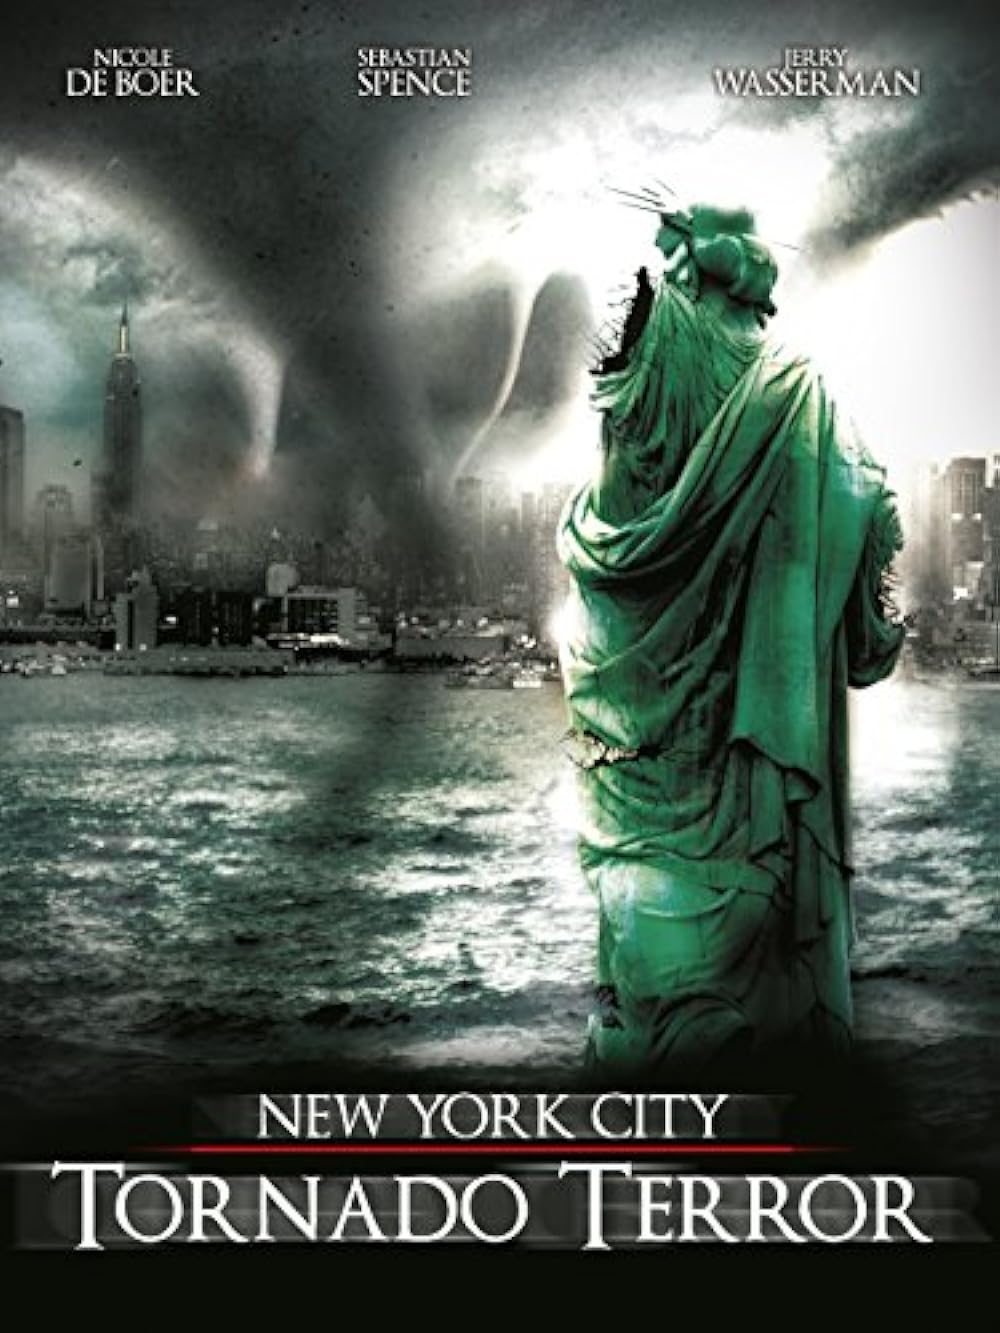 New York'ta Terör - NYC Tornado Terror (2008) 720p.dvdrip.x264.tr-en dual Nyc_to10